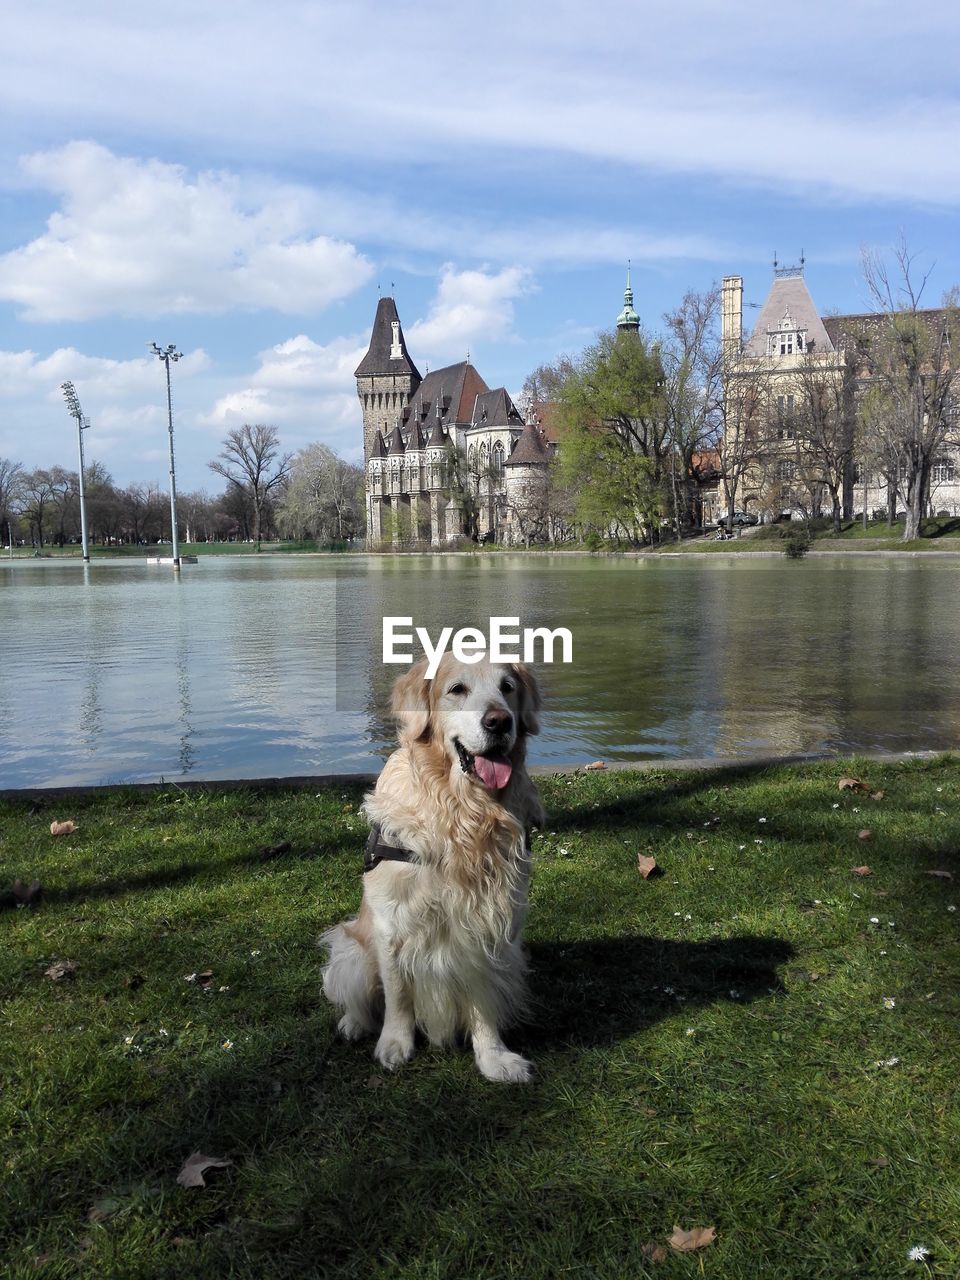 Golden retriever dog by lake against vajdahunyad castle